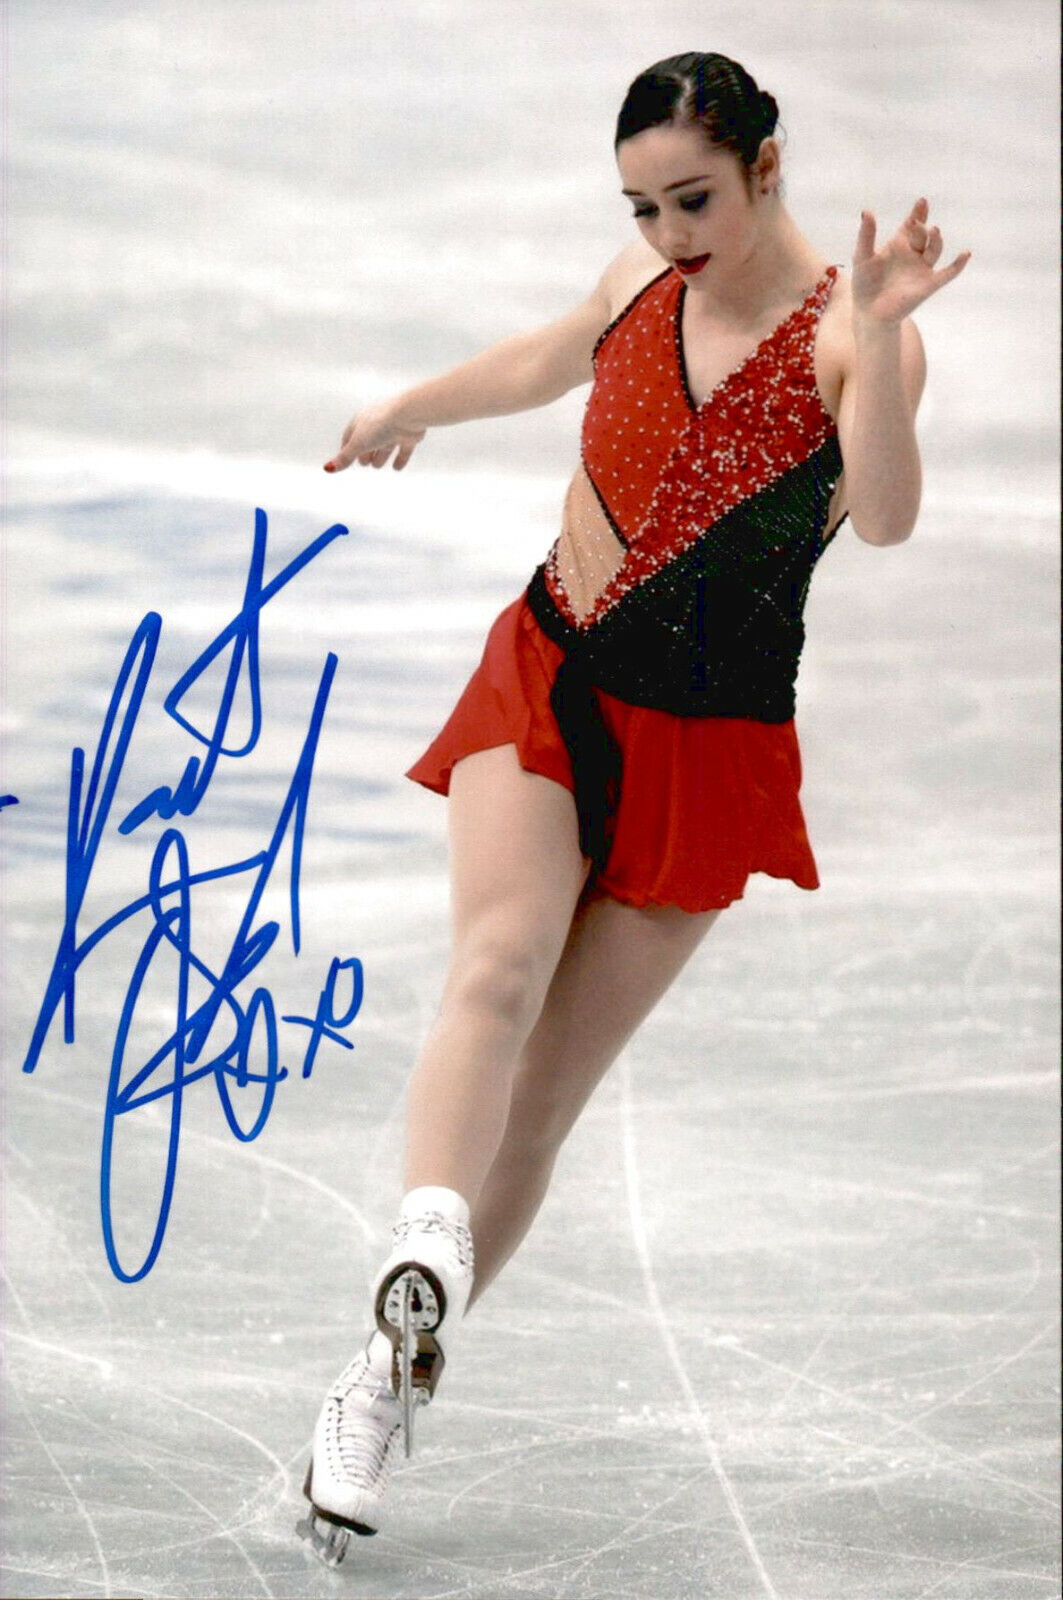 Kaetlyn Osmond SIGNED 4x6 Photo Poster painting Figure Skating OLYMPICS 2014 SOCHI #2